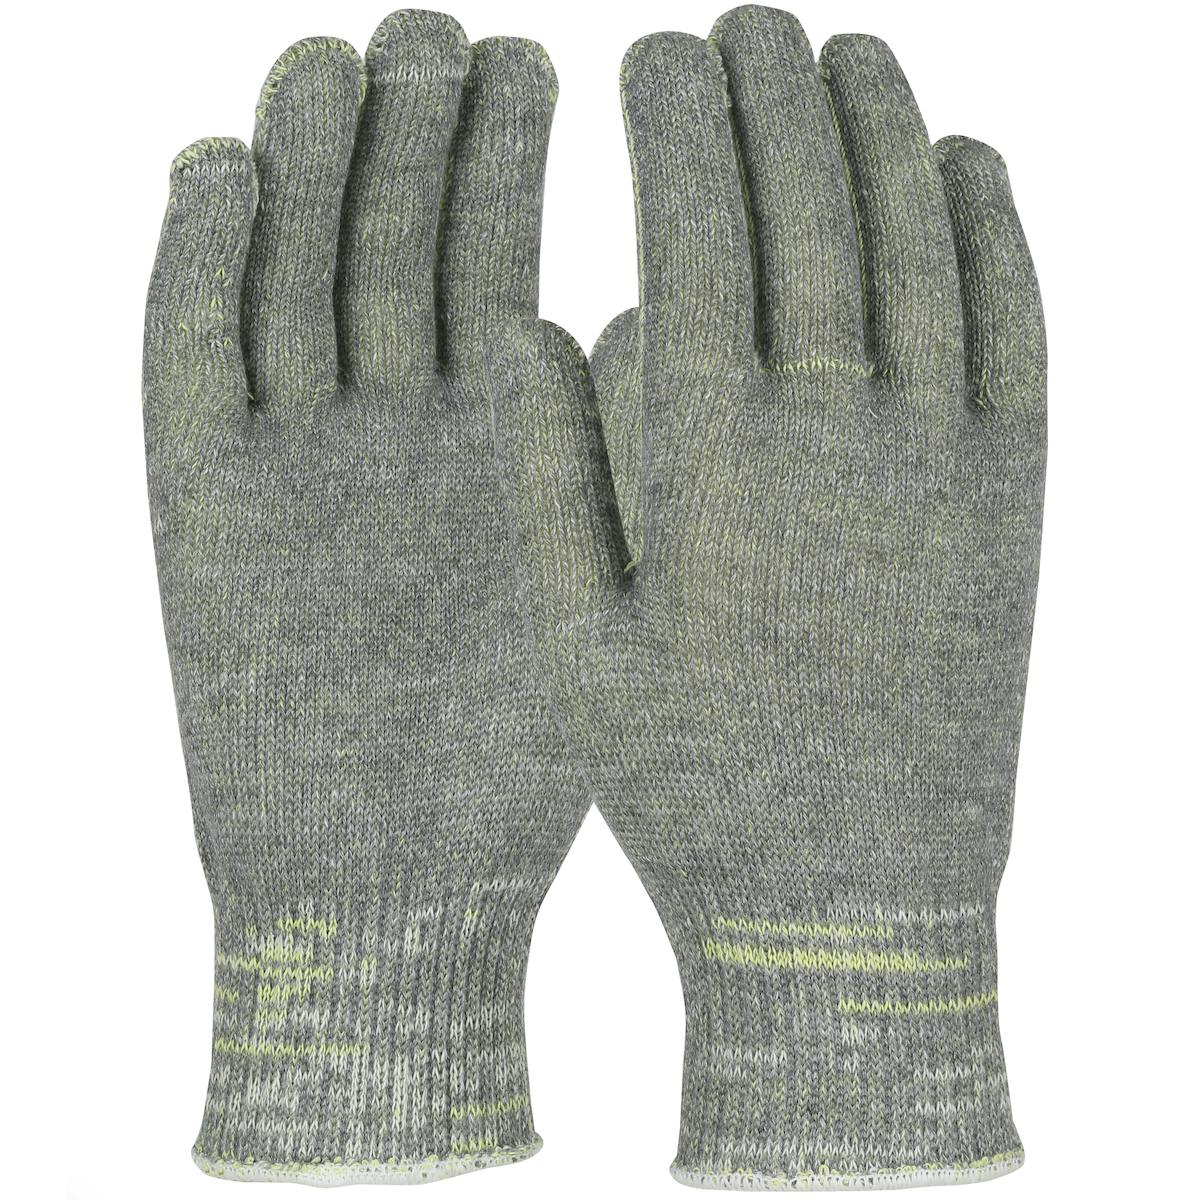 Kut Gard® Seamless Knit ATA® Blended Glove - Medium Weight (MATA10-GY)